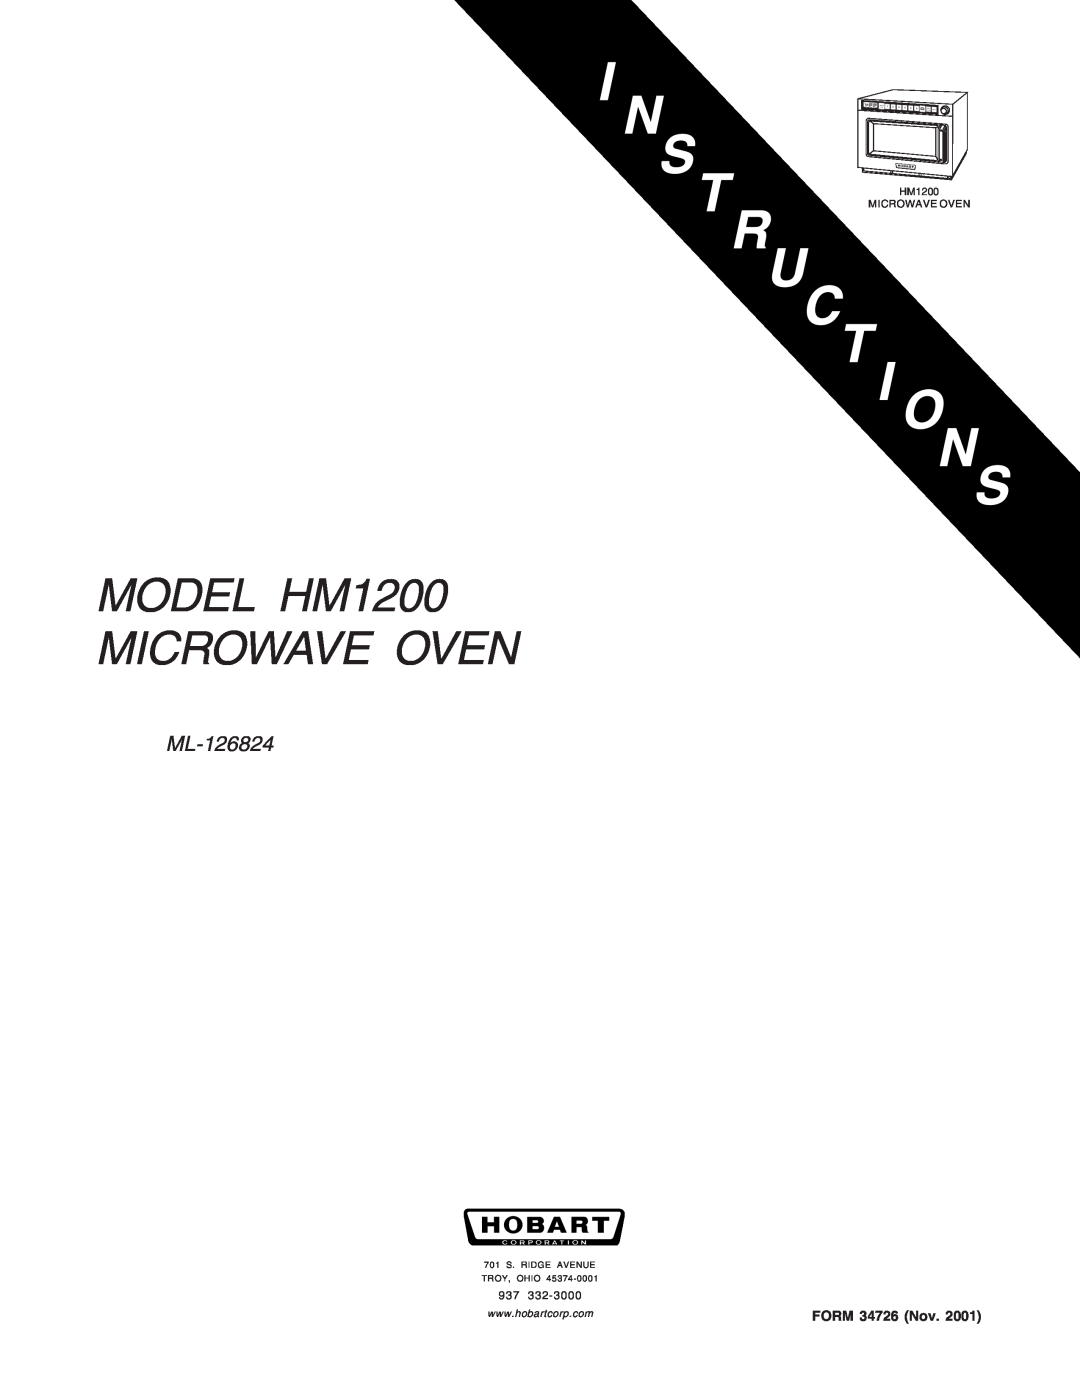 Hobart manual MODEL HM1200 MICROWAVE OVEN, ML-126824, FORM 34726 Nov, 701 S. RIDGE AVENUE, Troy, Ohio 